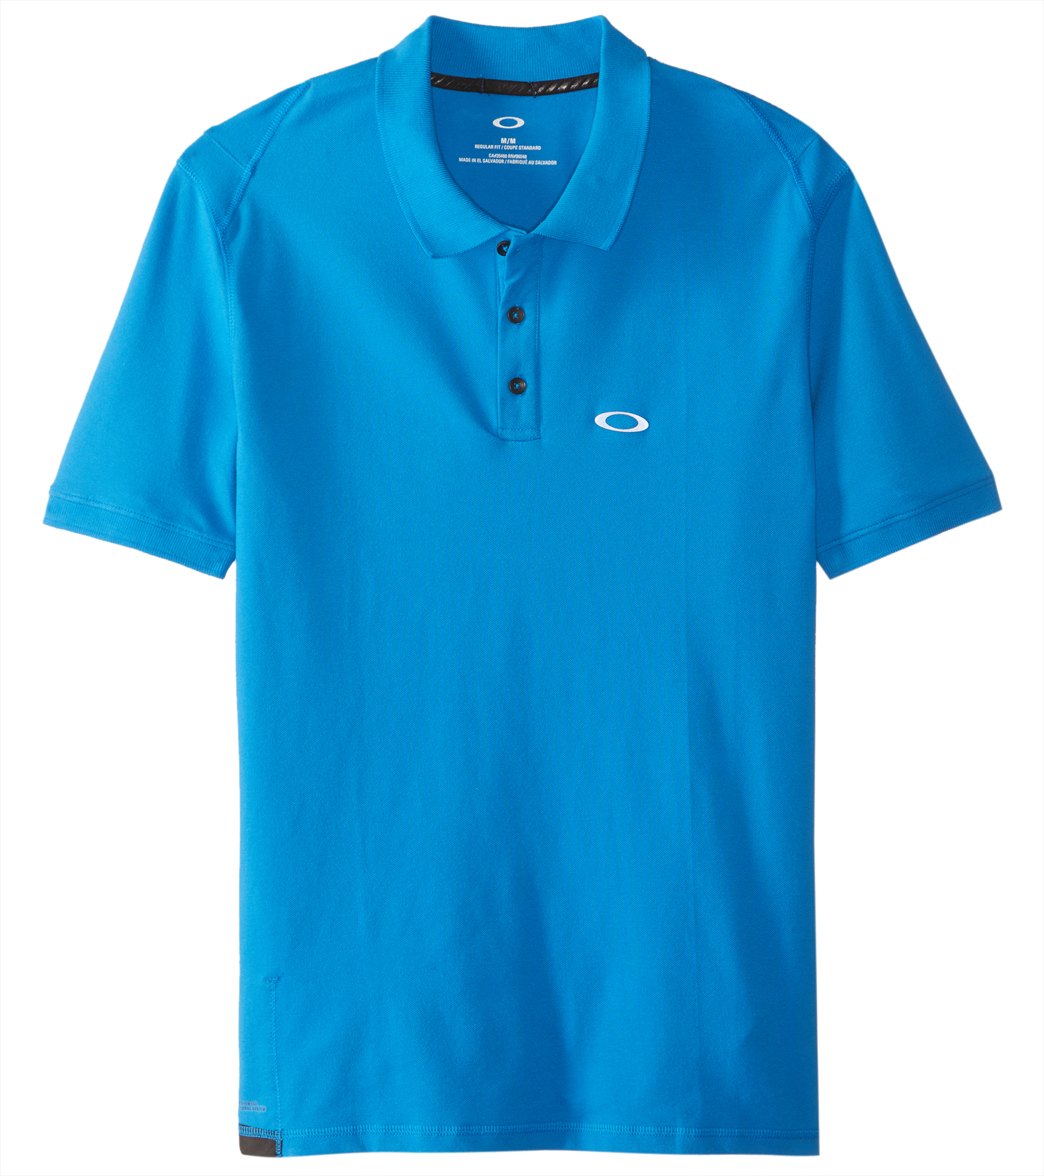 Oakley Men's Icon Short Sleeve Polo Shirt at SwimOutlet.com - Free Shipping